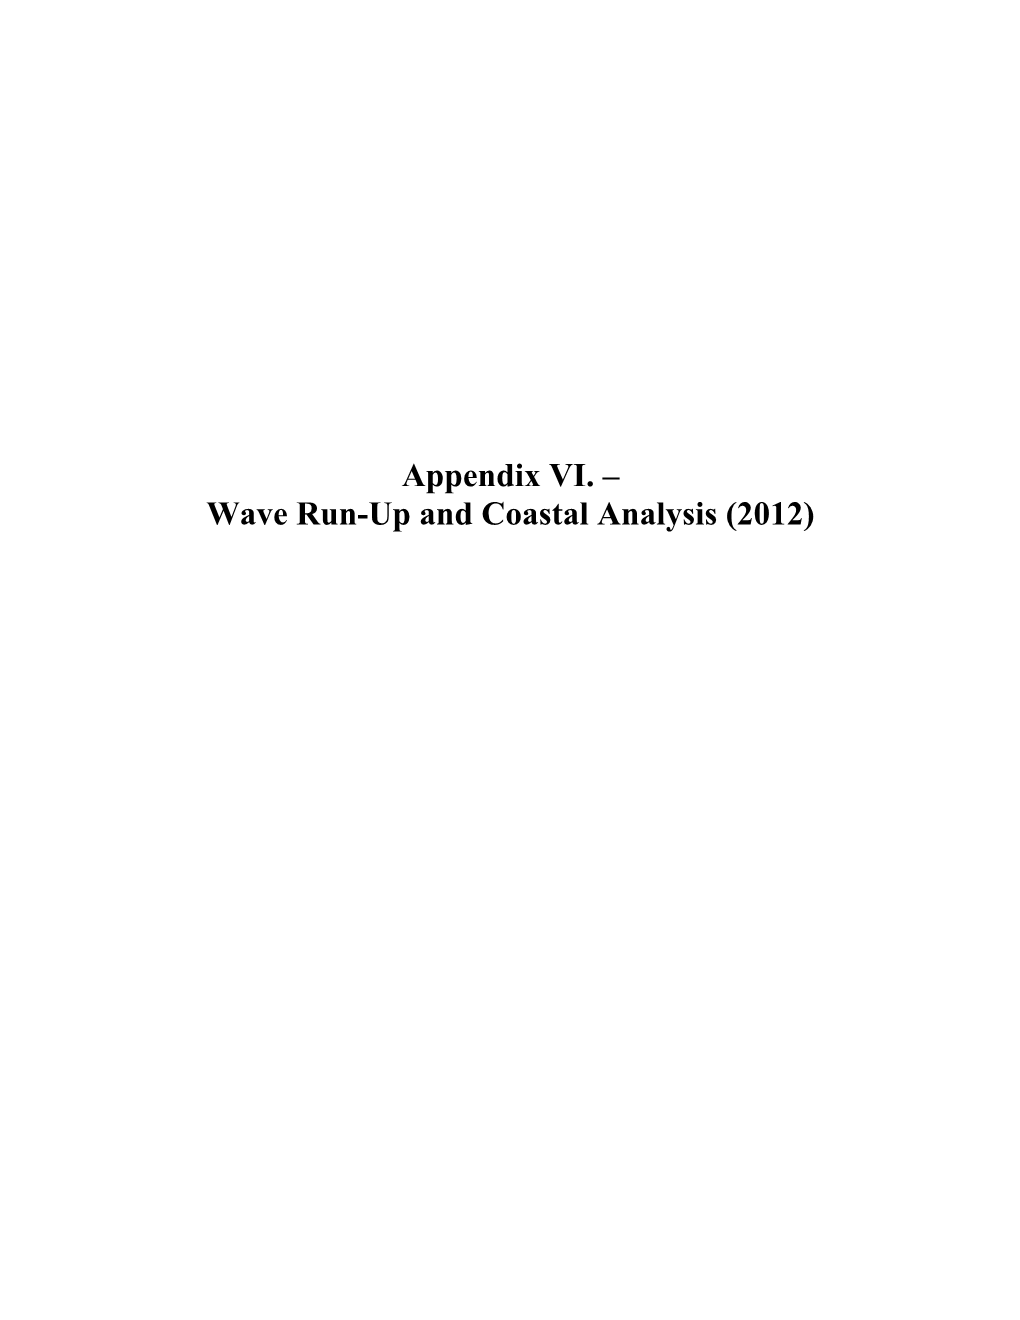 Wave Run-Up and Coastal Analysis (2012)